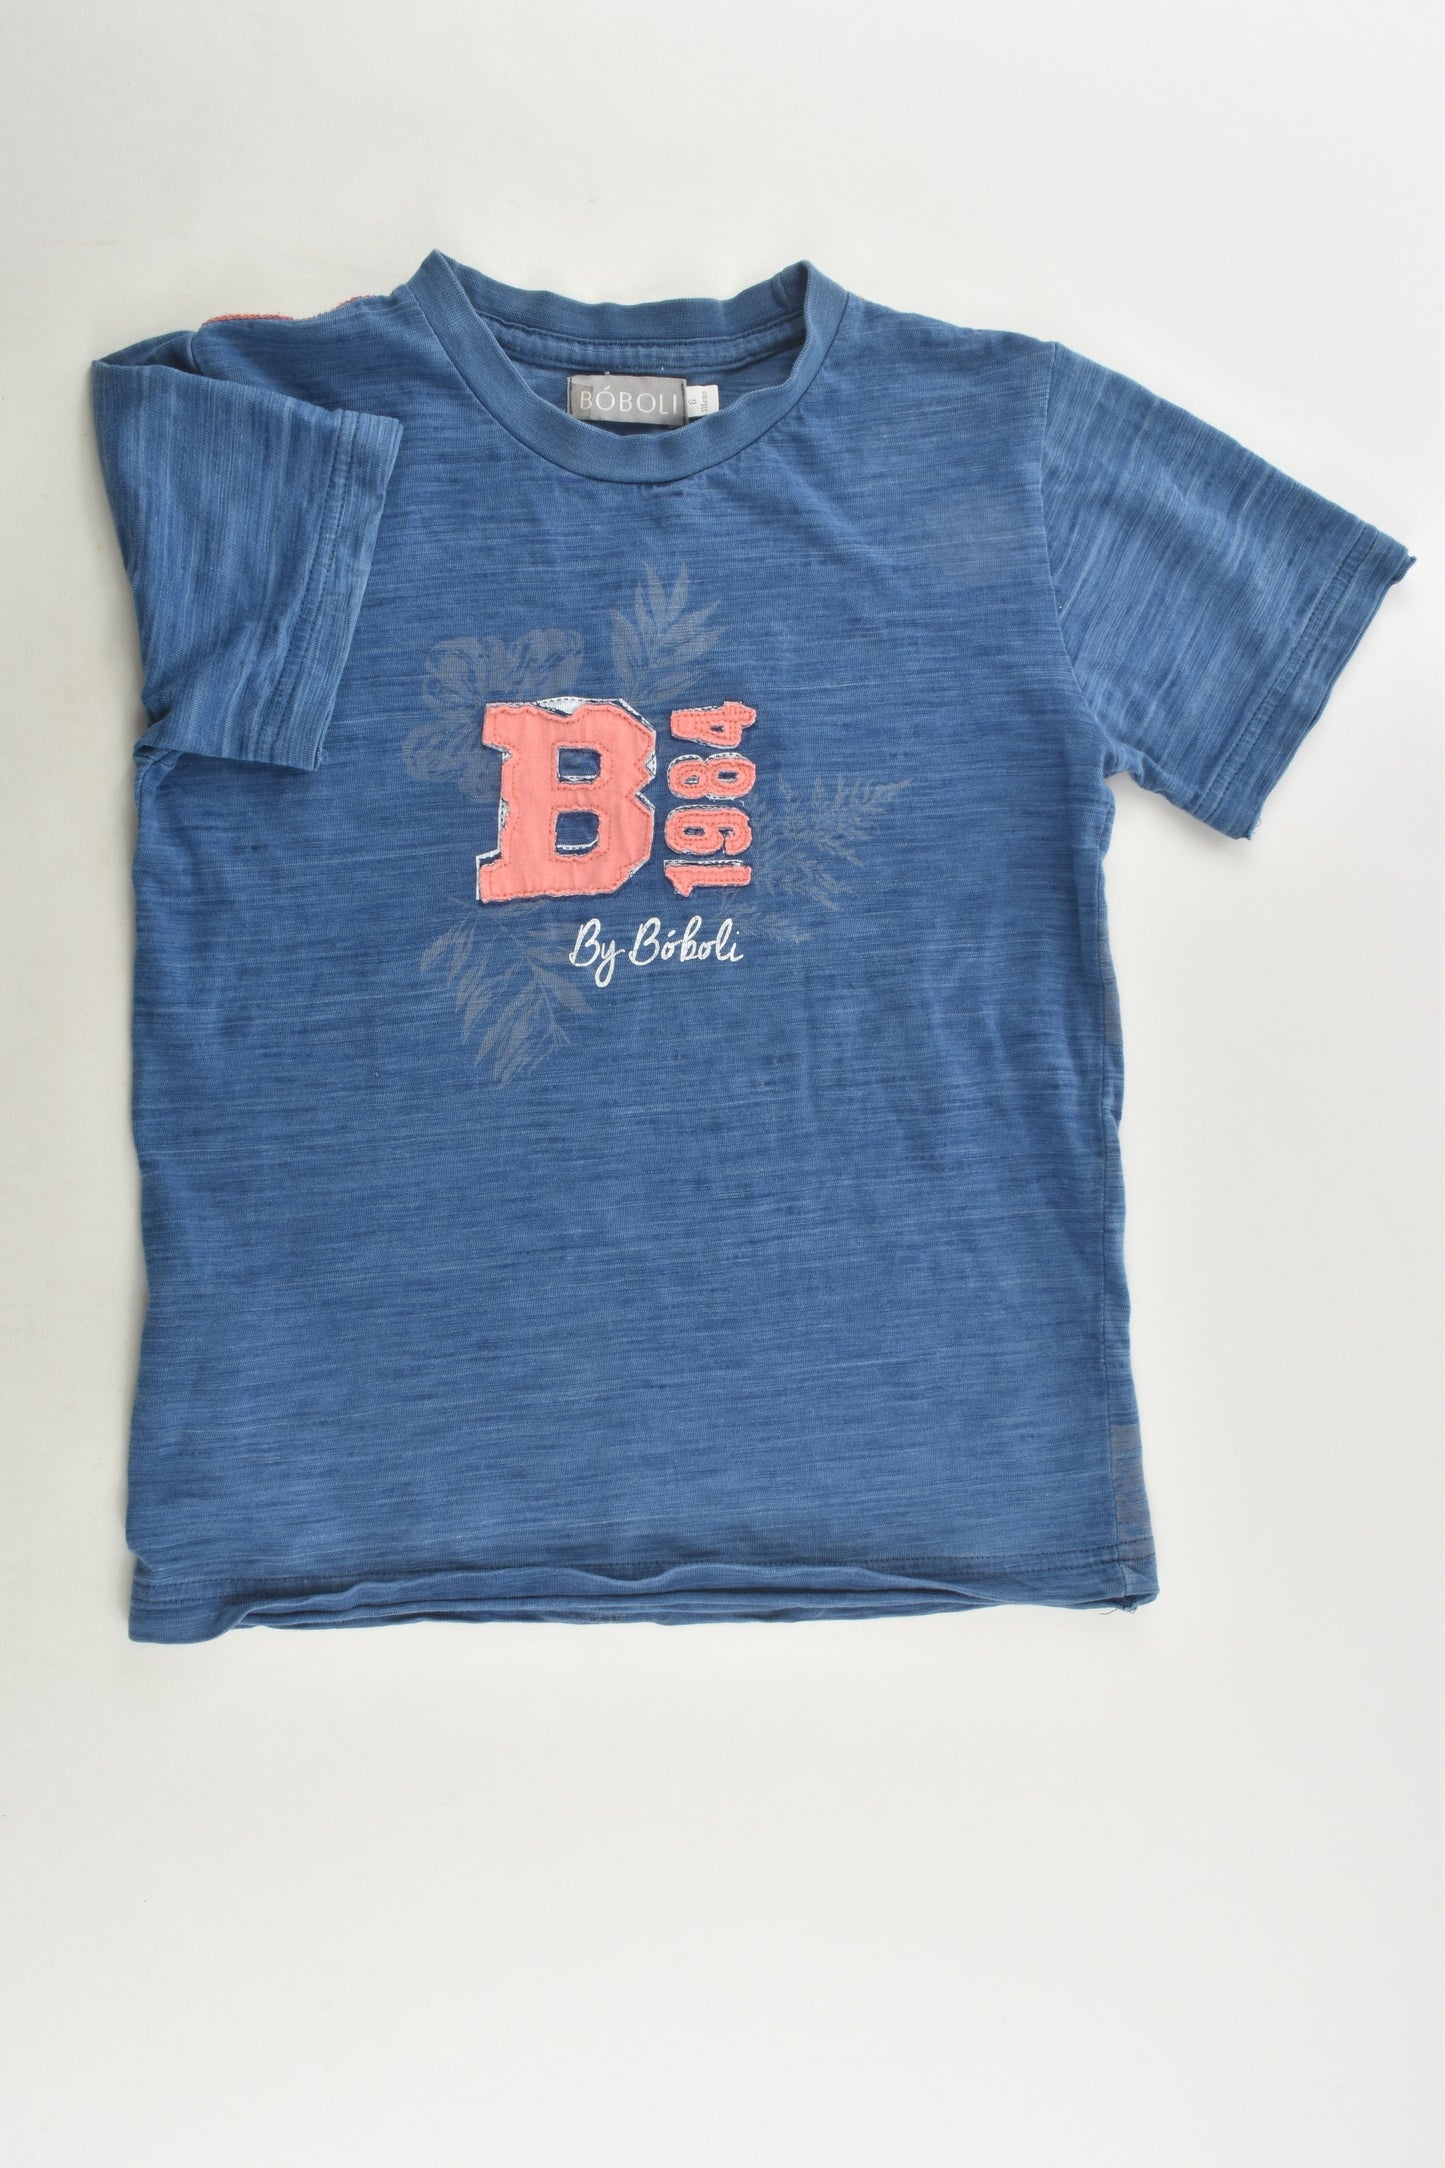 Bóboli Size 6 T-shirt